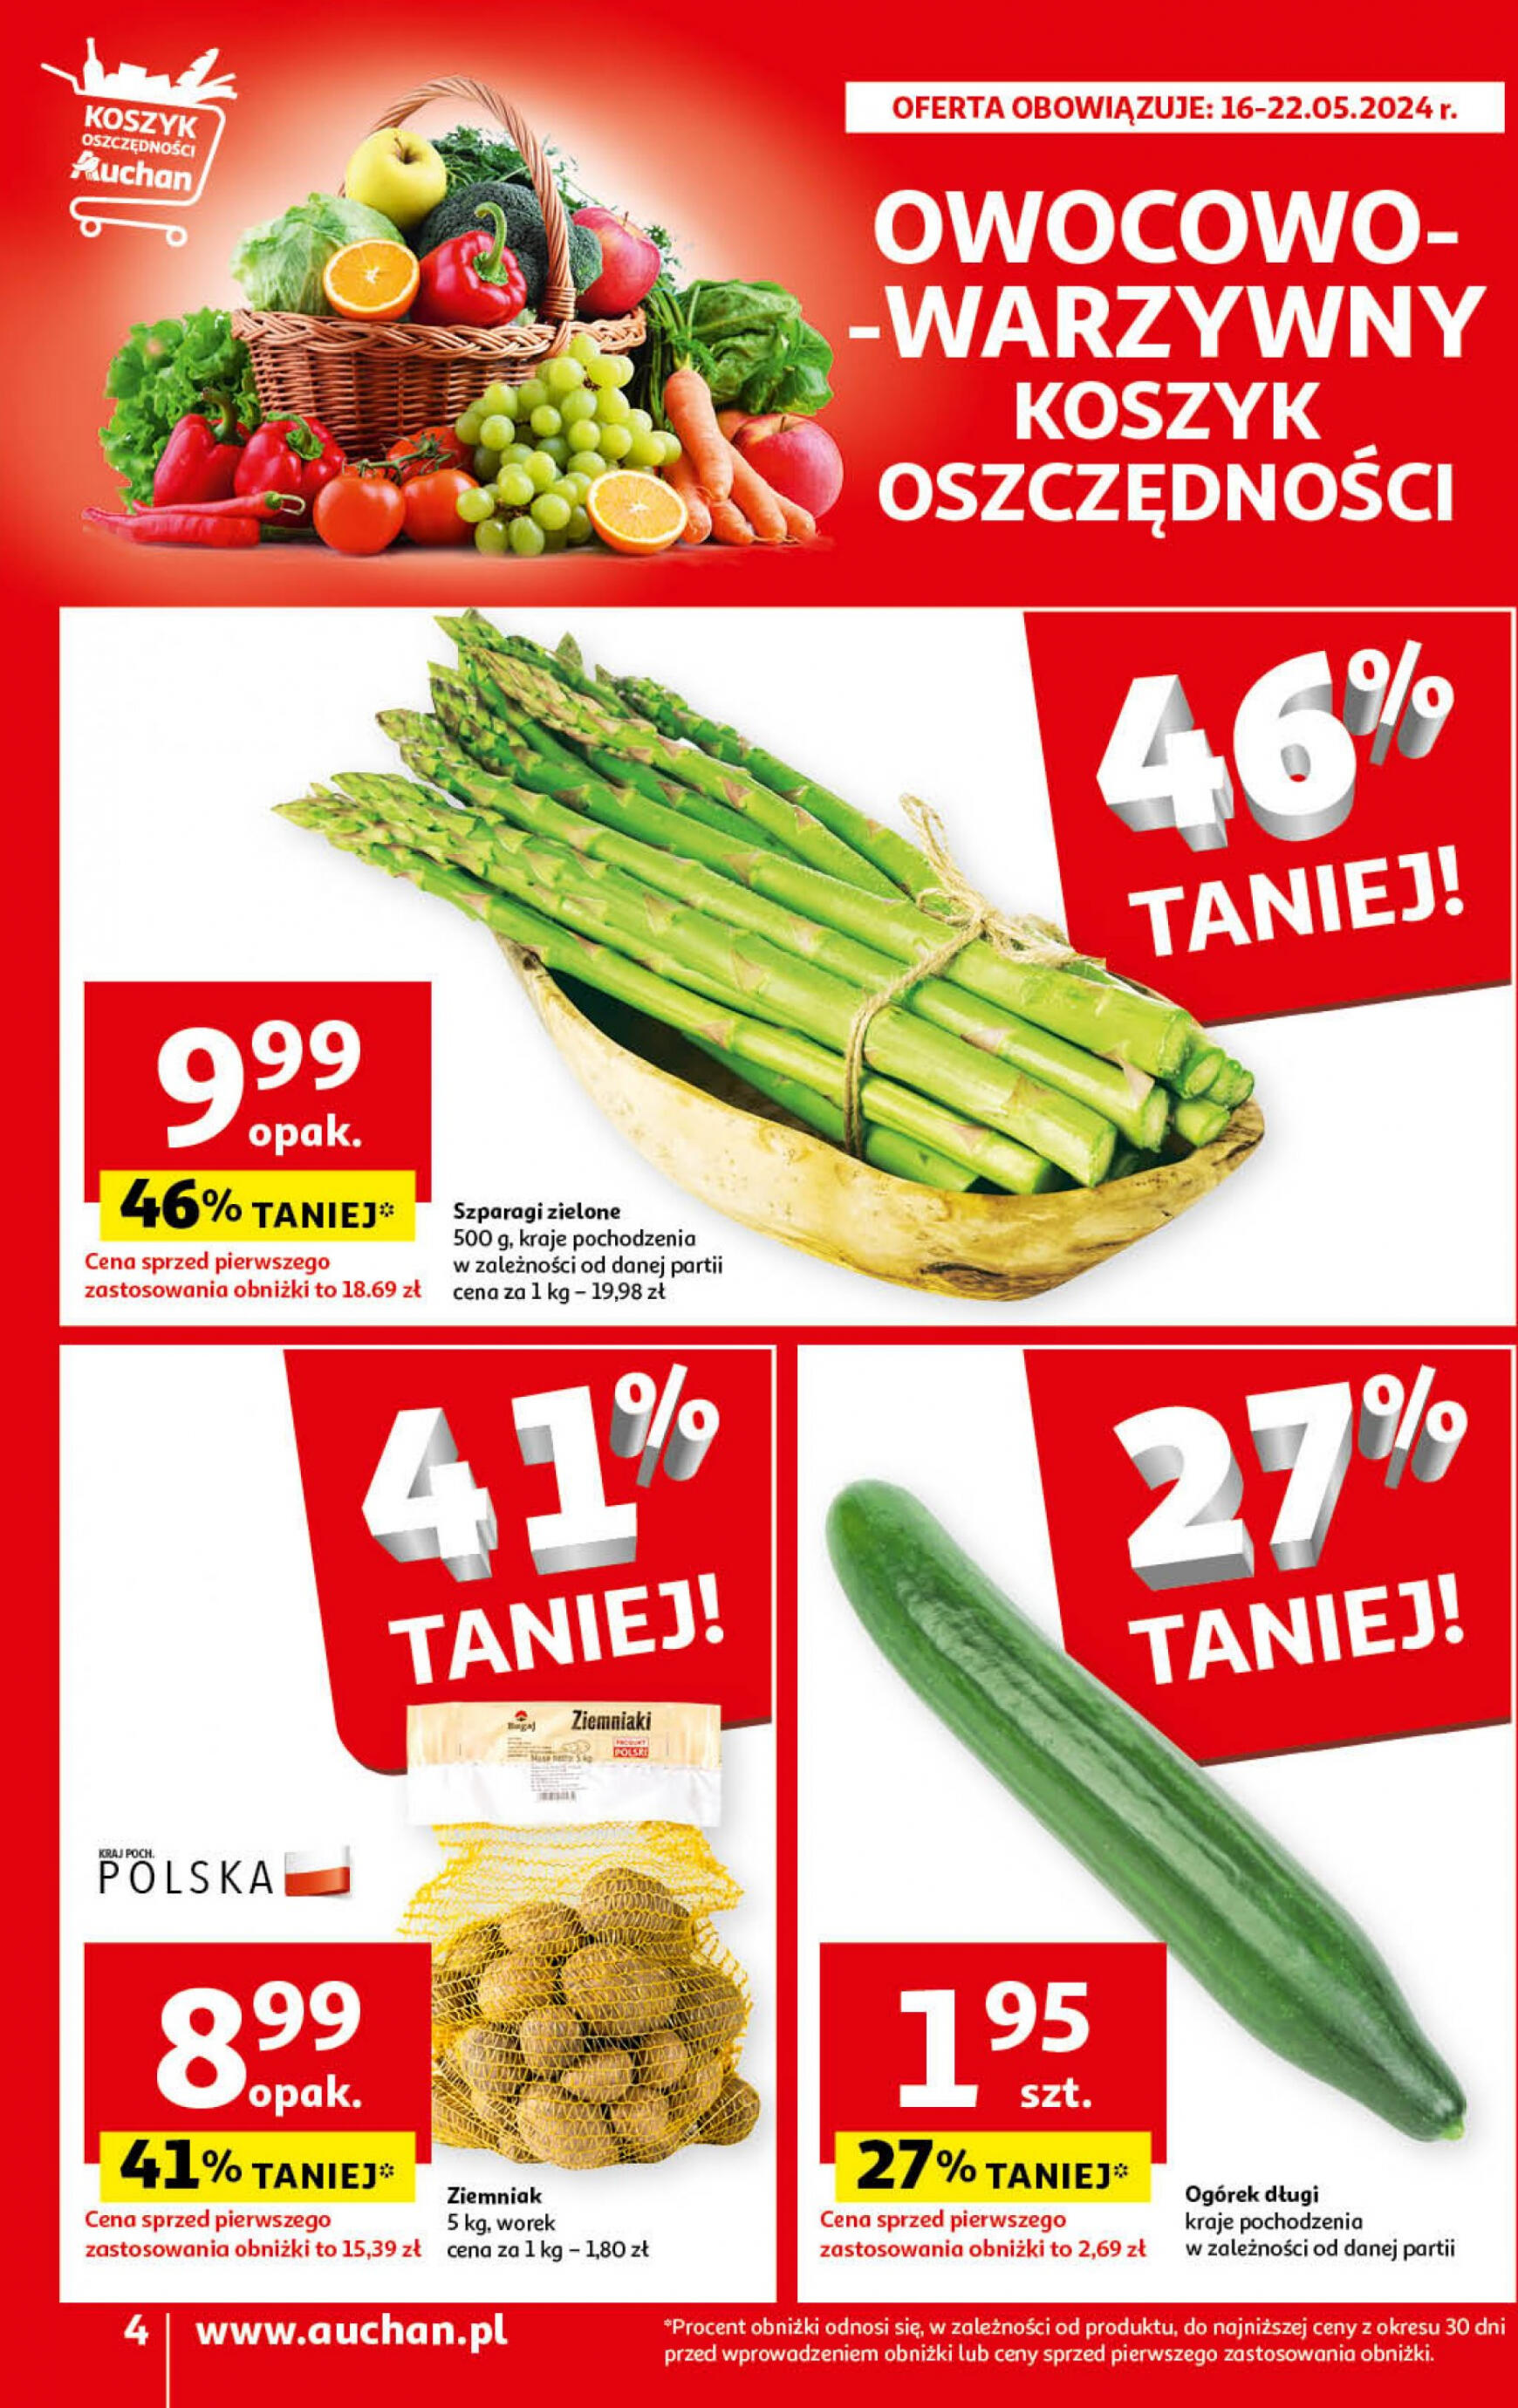 auchan - Moje Auchan gazetka aktualna ważna od 16.05. - 22.05. - page: 4